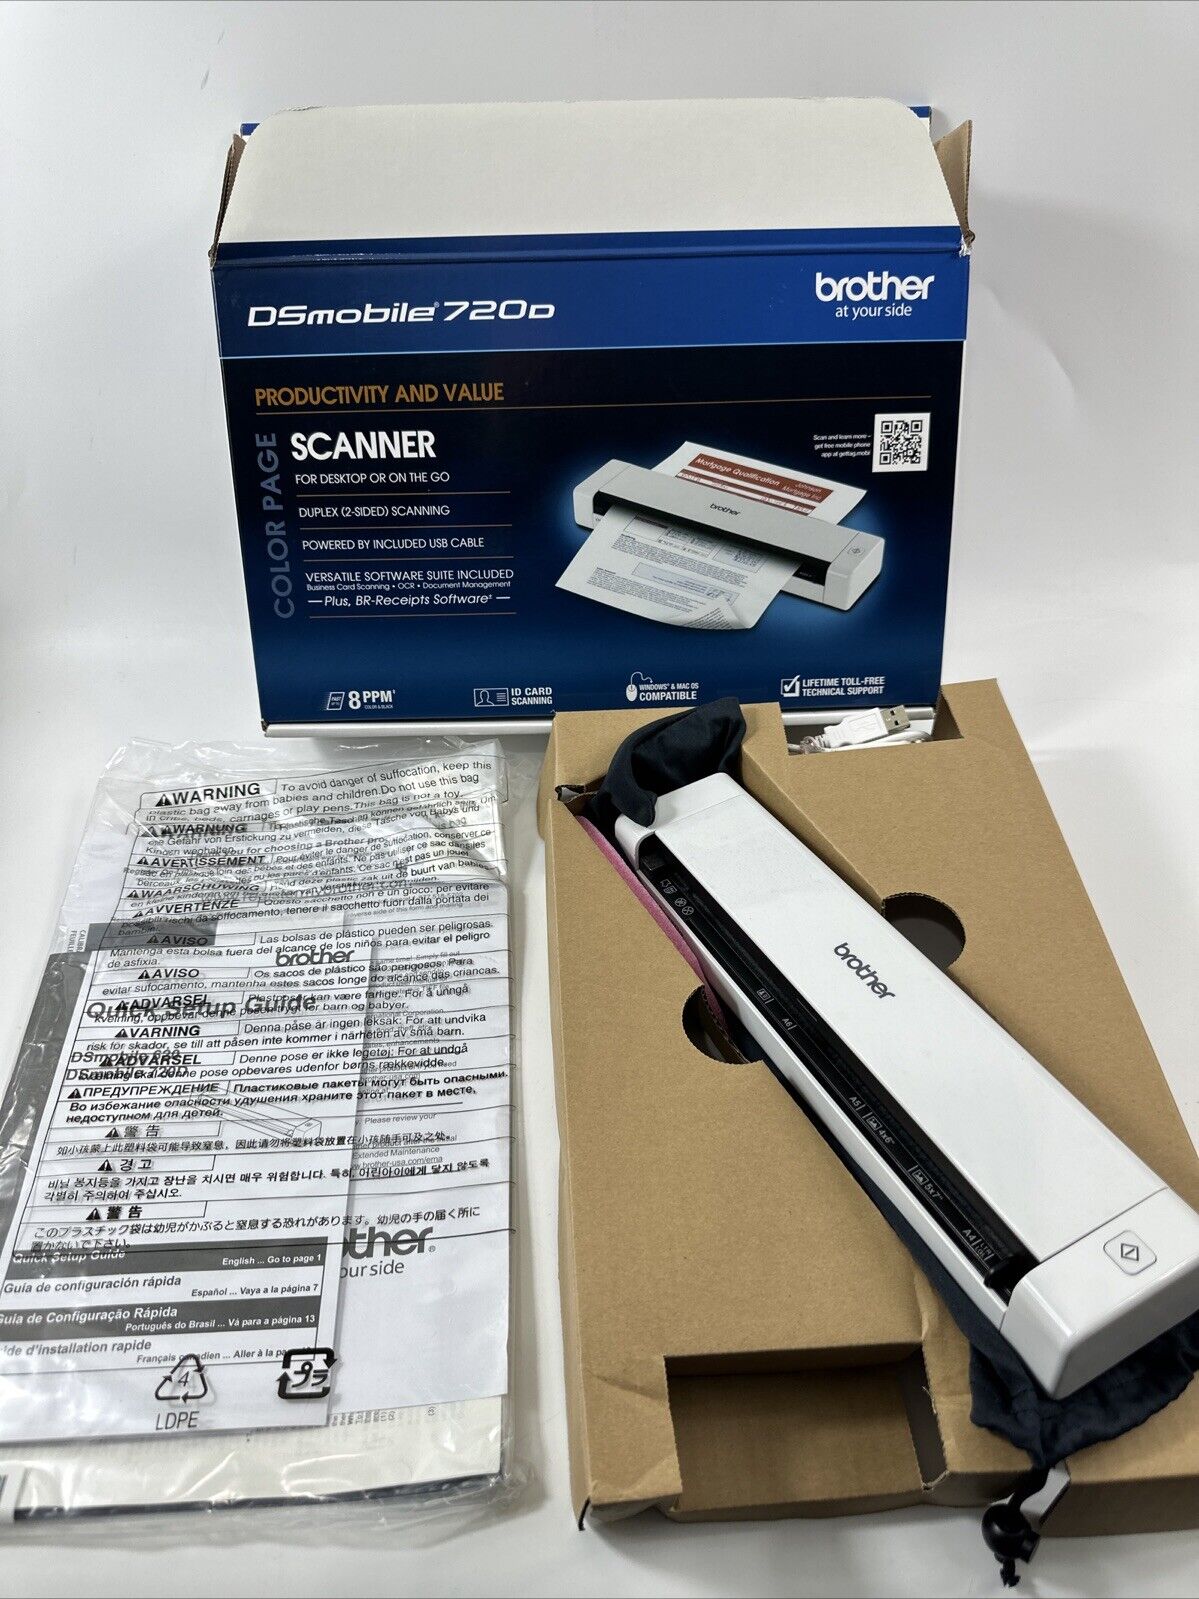 Brother DS-720D DSMobile Portable Scanner USB Duplex For Desktop Or On The Go